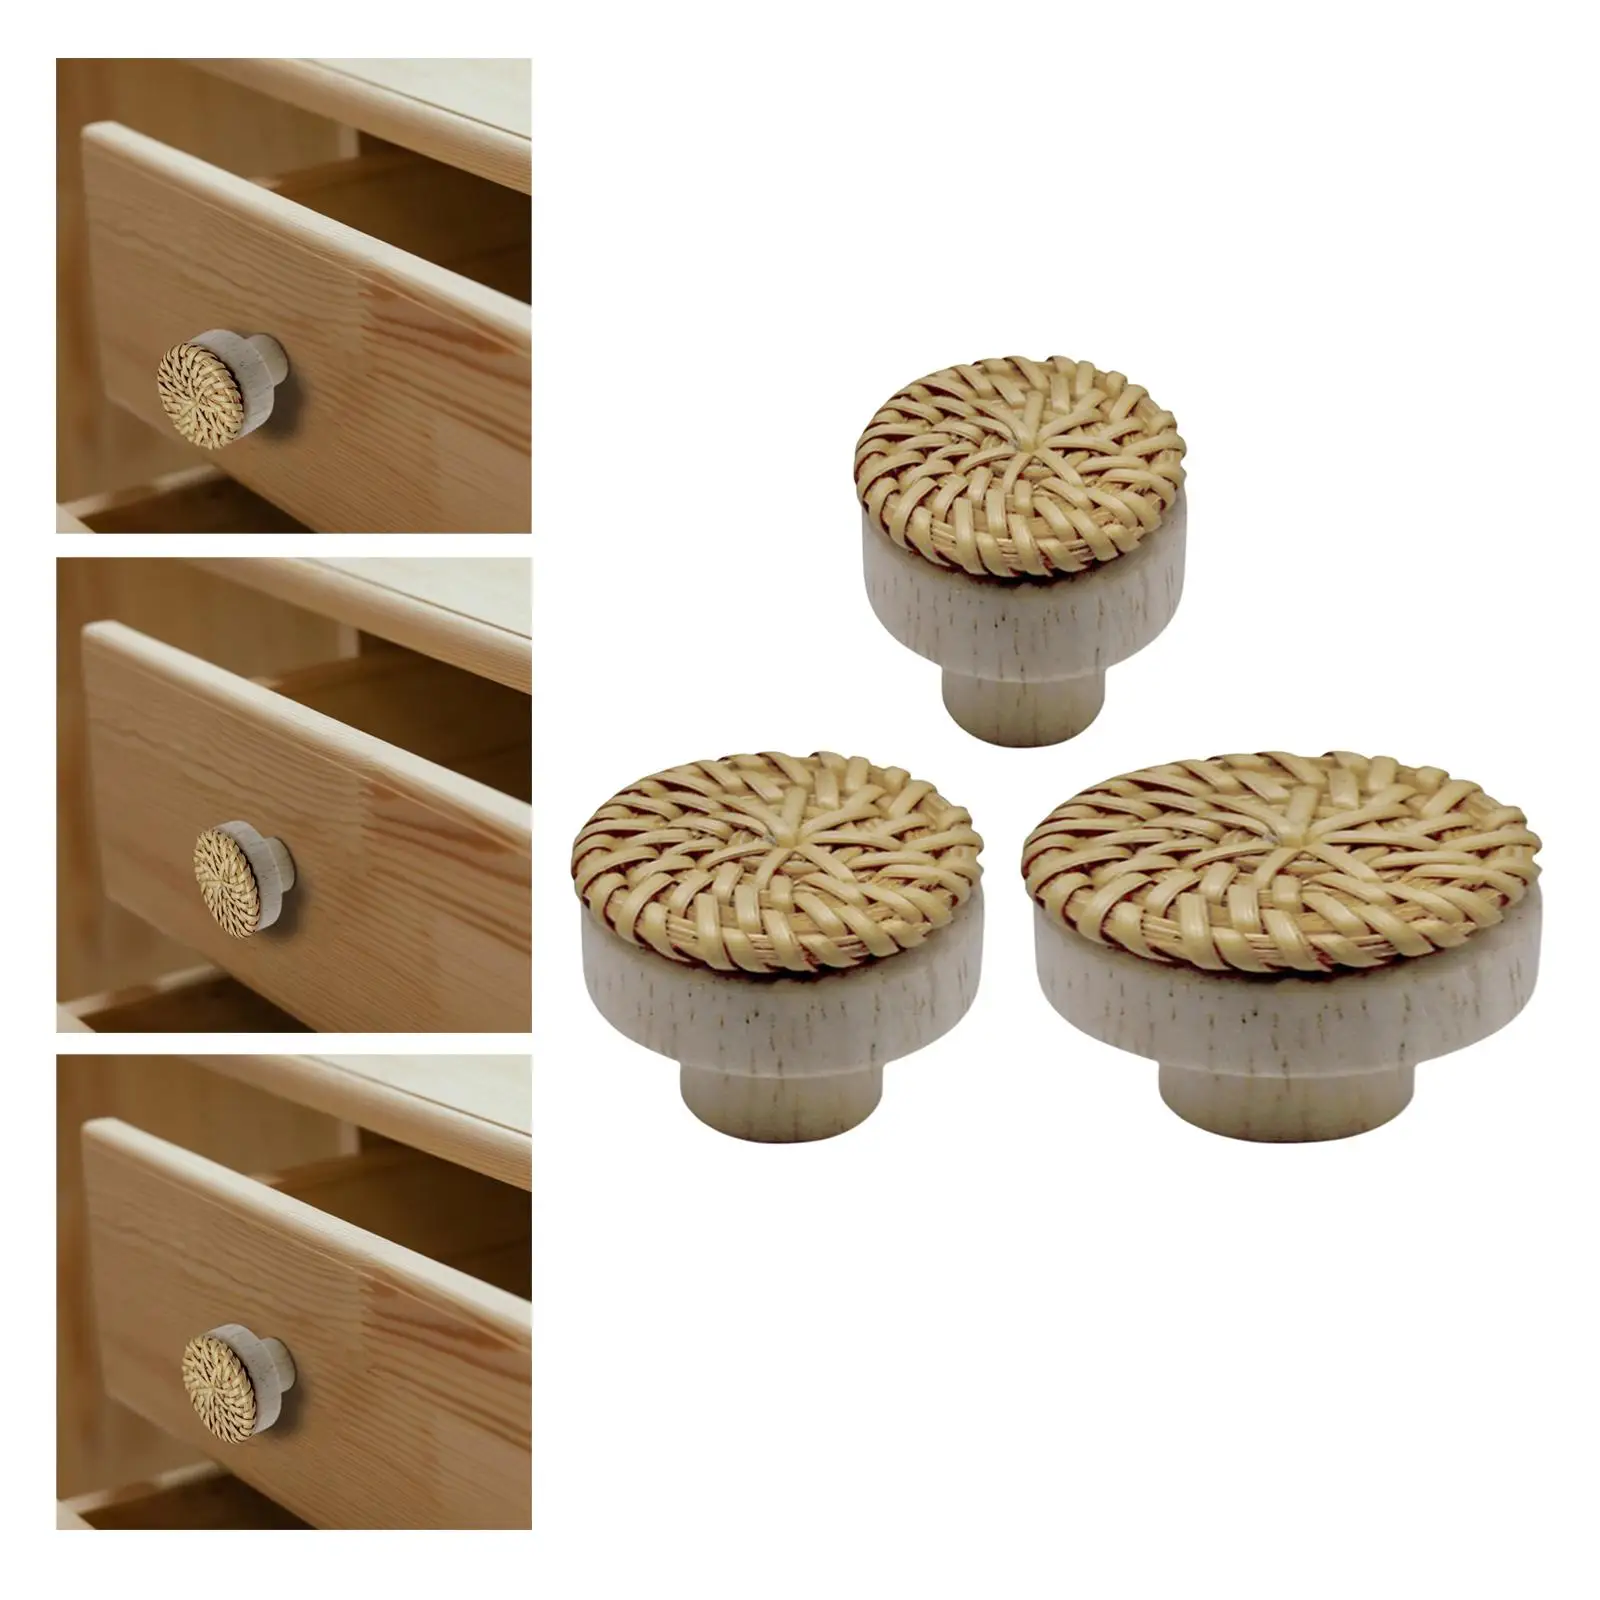 Rattan Dresser Knob Drawer Pulls Decorative Handmade Retro Style Rustic Accessories Handles for Cabinet Furniture